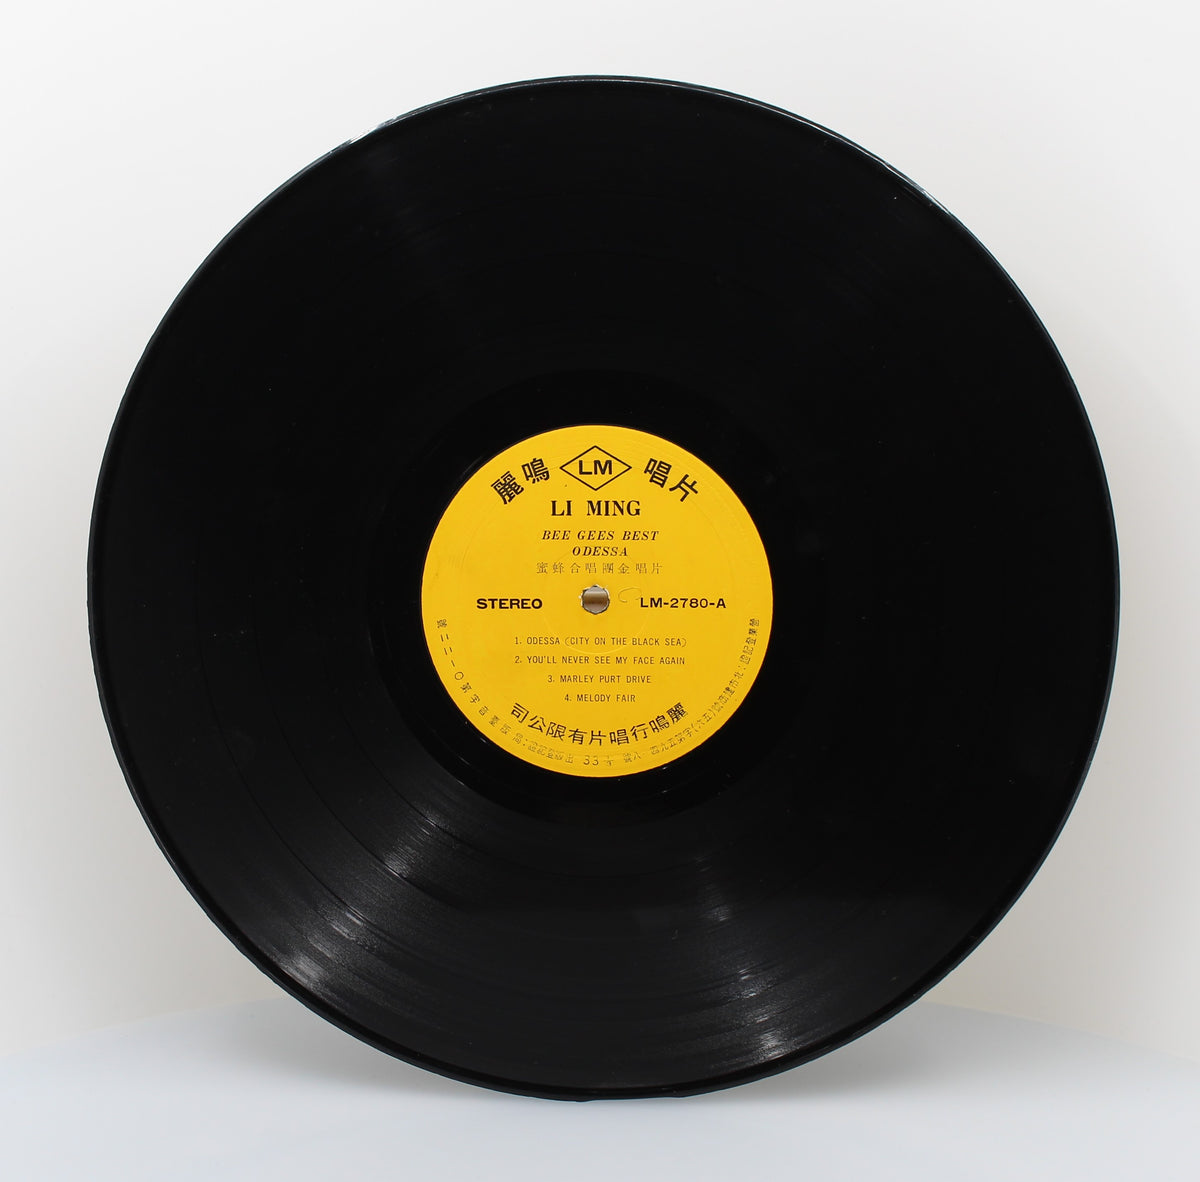 Bee Gees – Odessa, Vinyl, LP, Album, Unofficial Release, Taiwan 1969